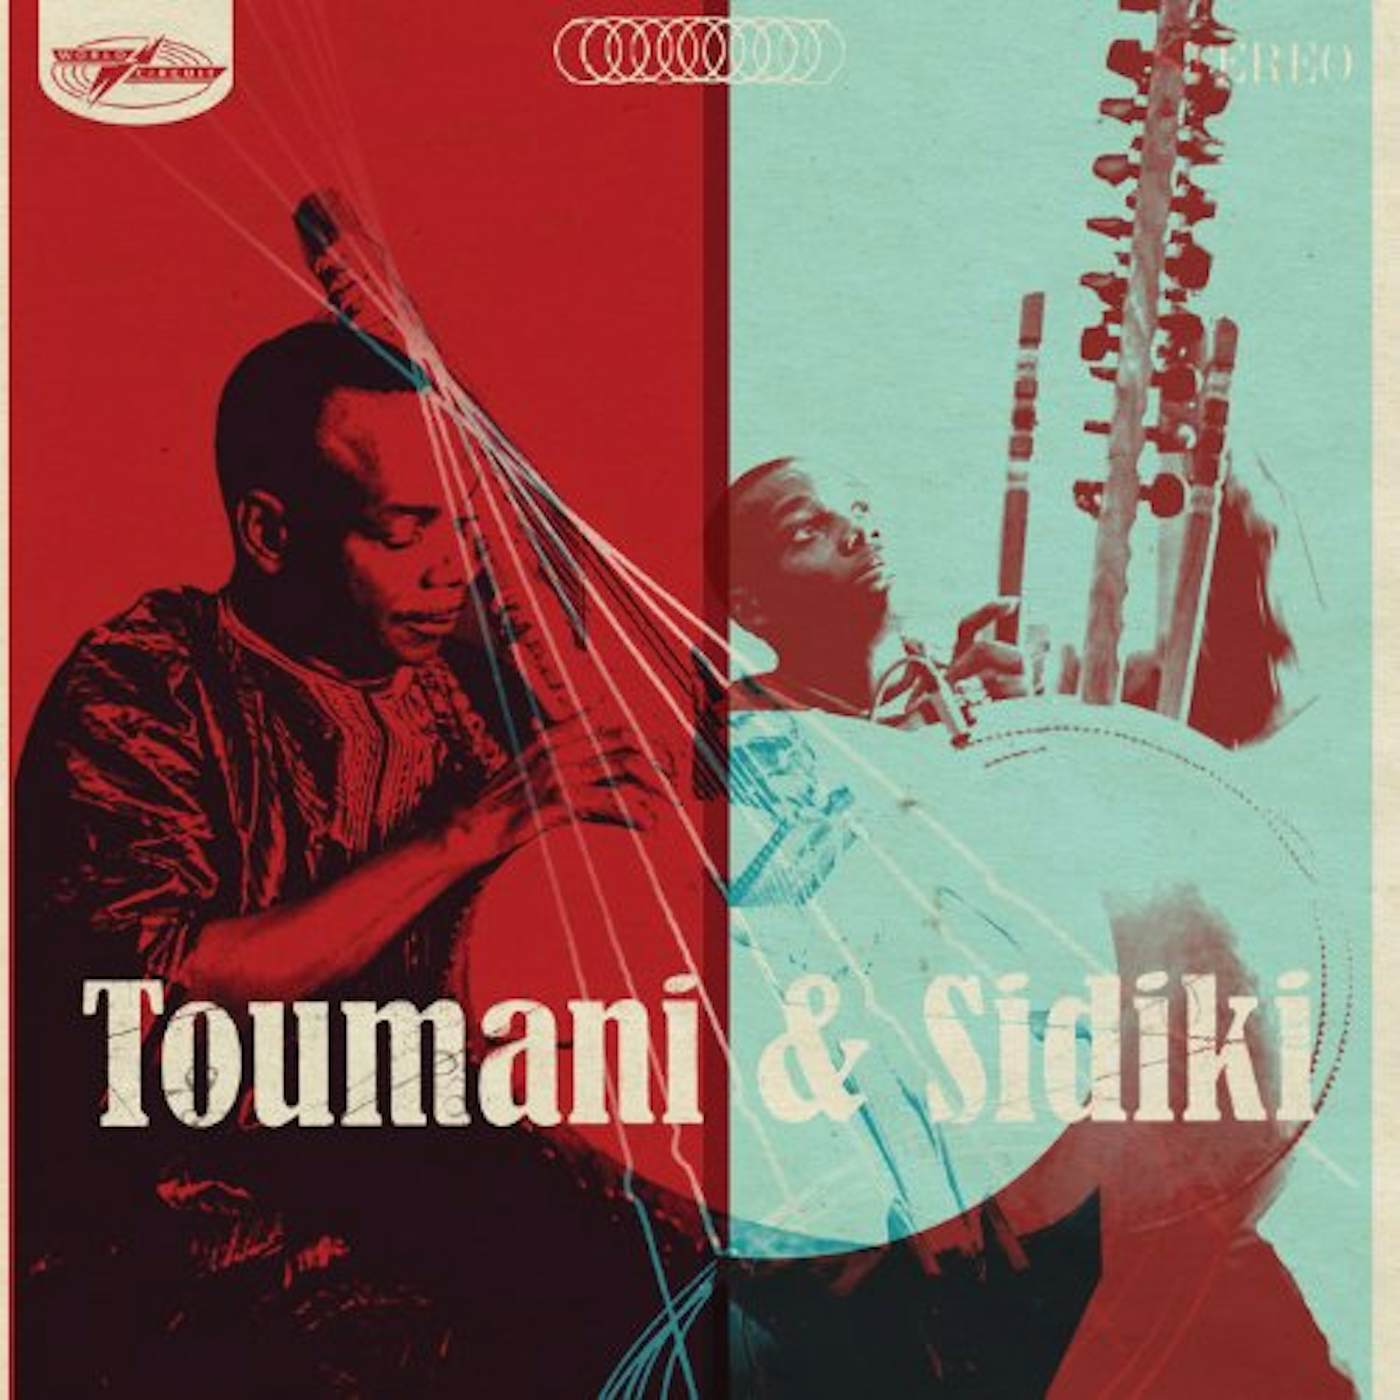 Toumani Diabate & Sidiki Diabate Toumani & Sidiki Vinyl Record